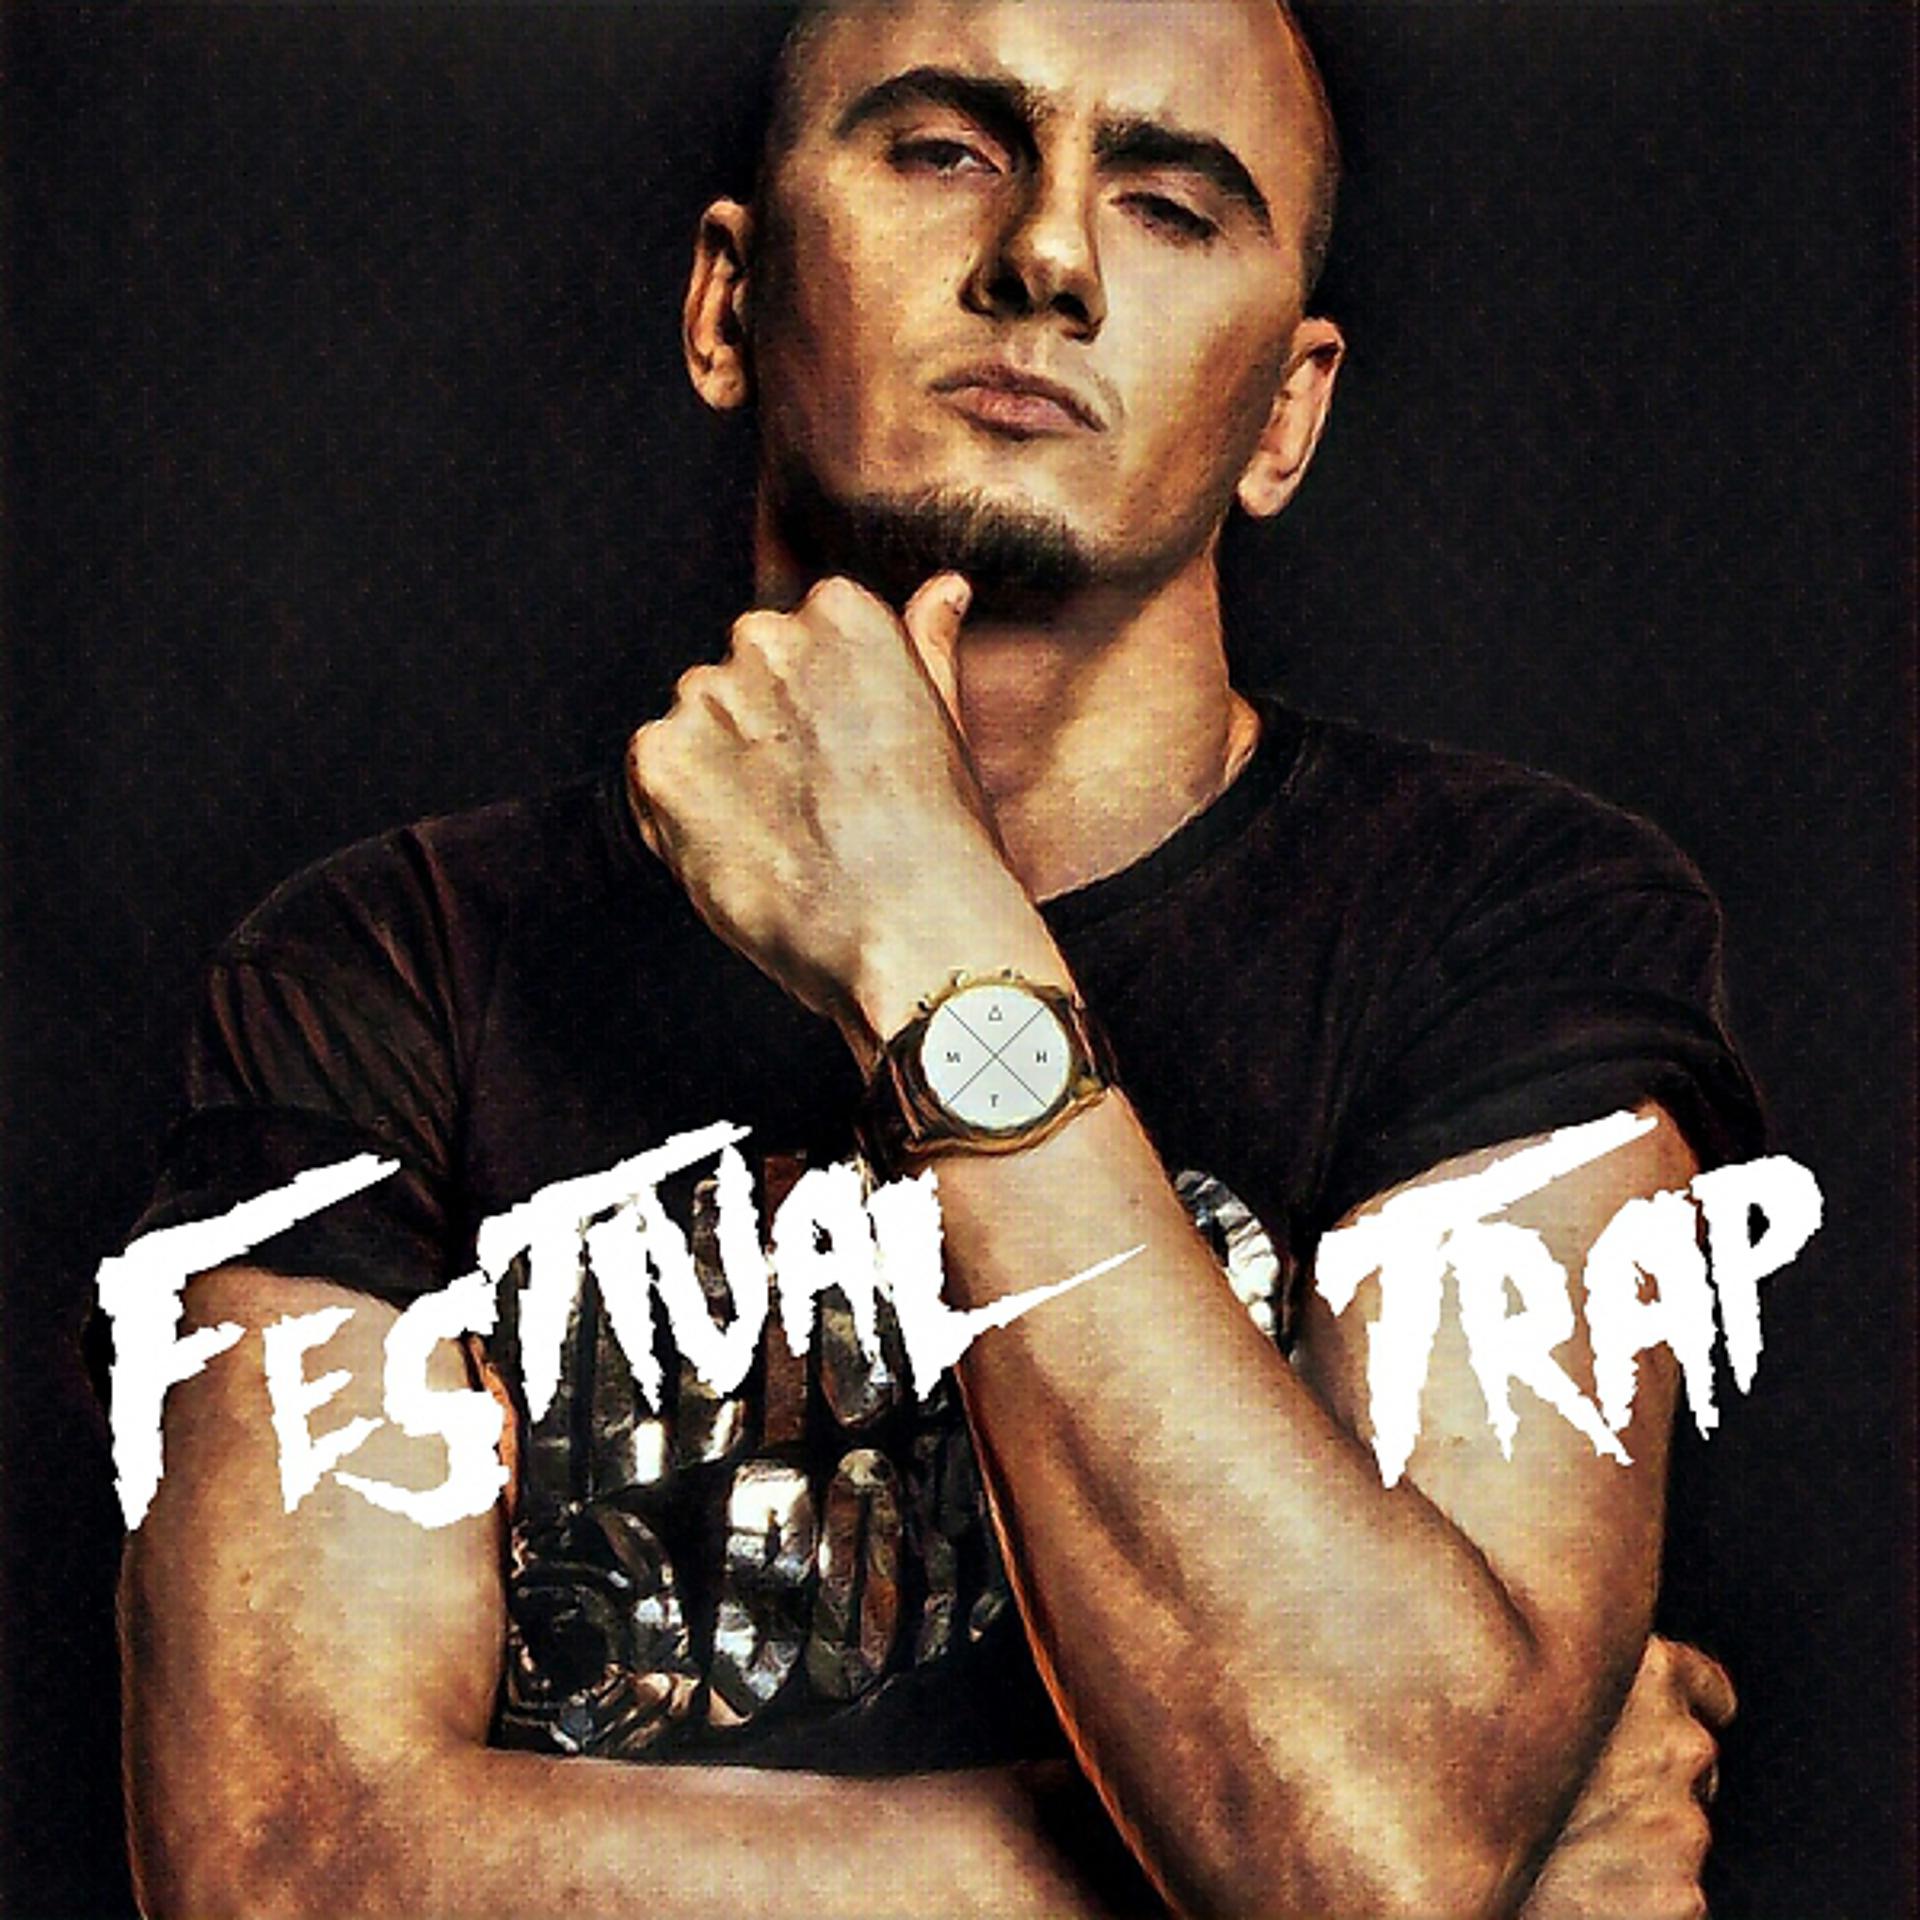 Постер альбома Festival Trap Music